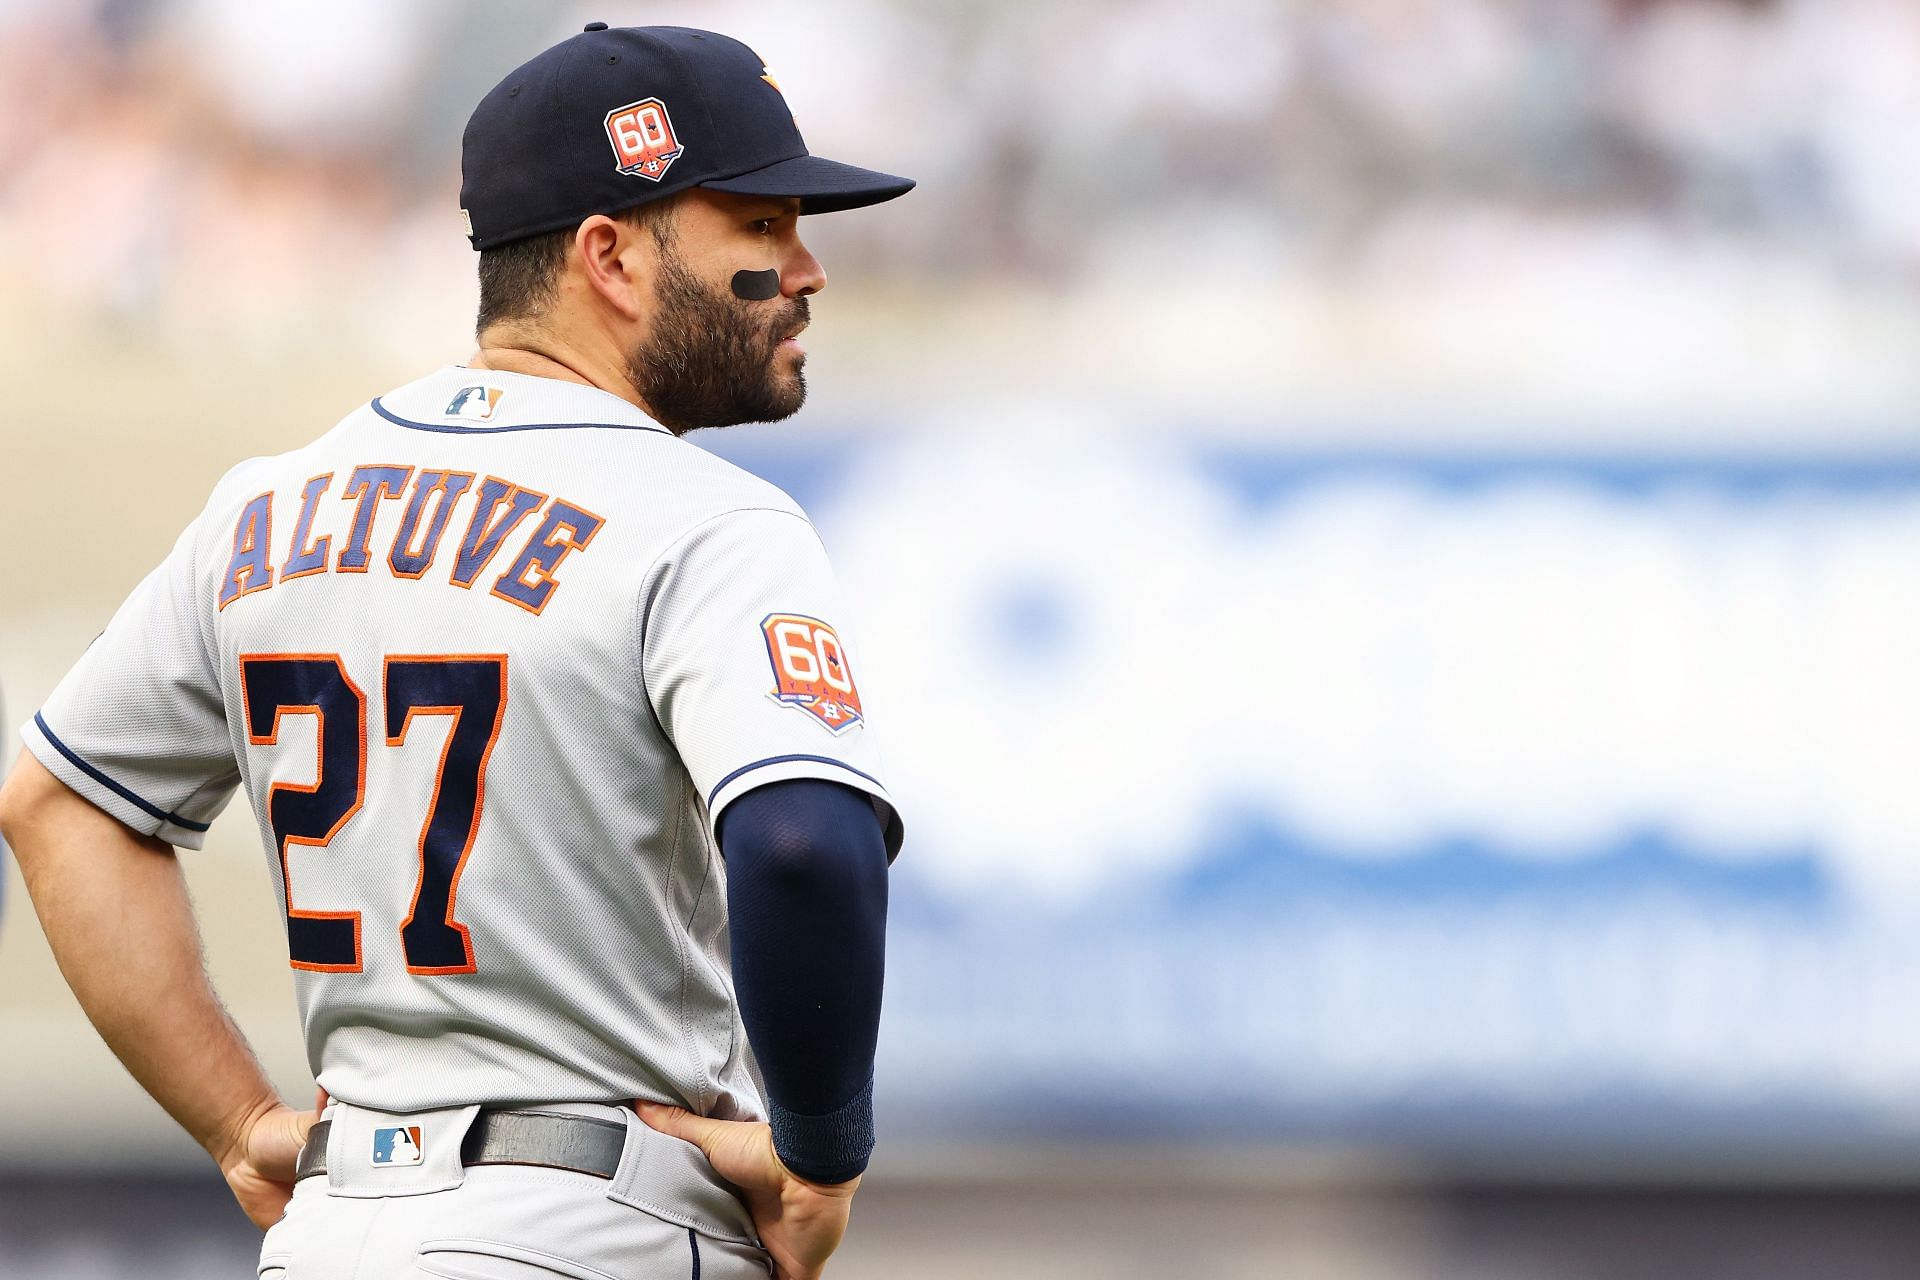 Jose Altuve tattoo conspiracy should heighten MLB's hunt